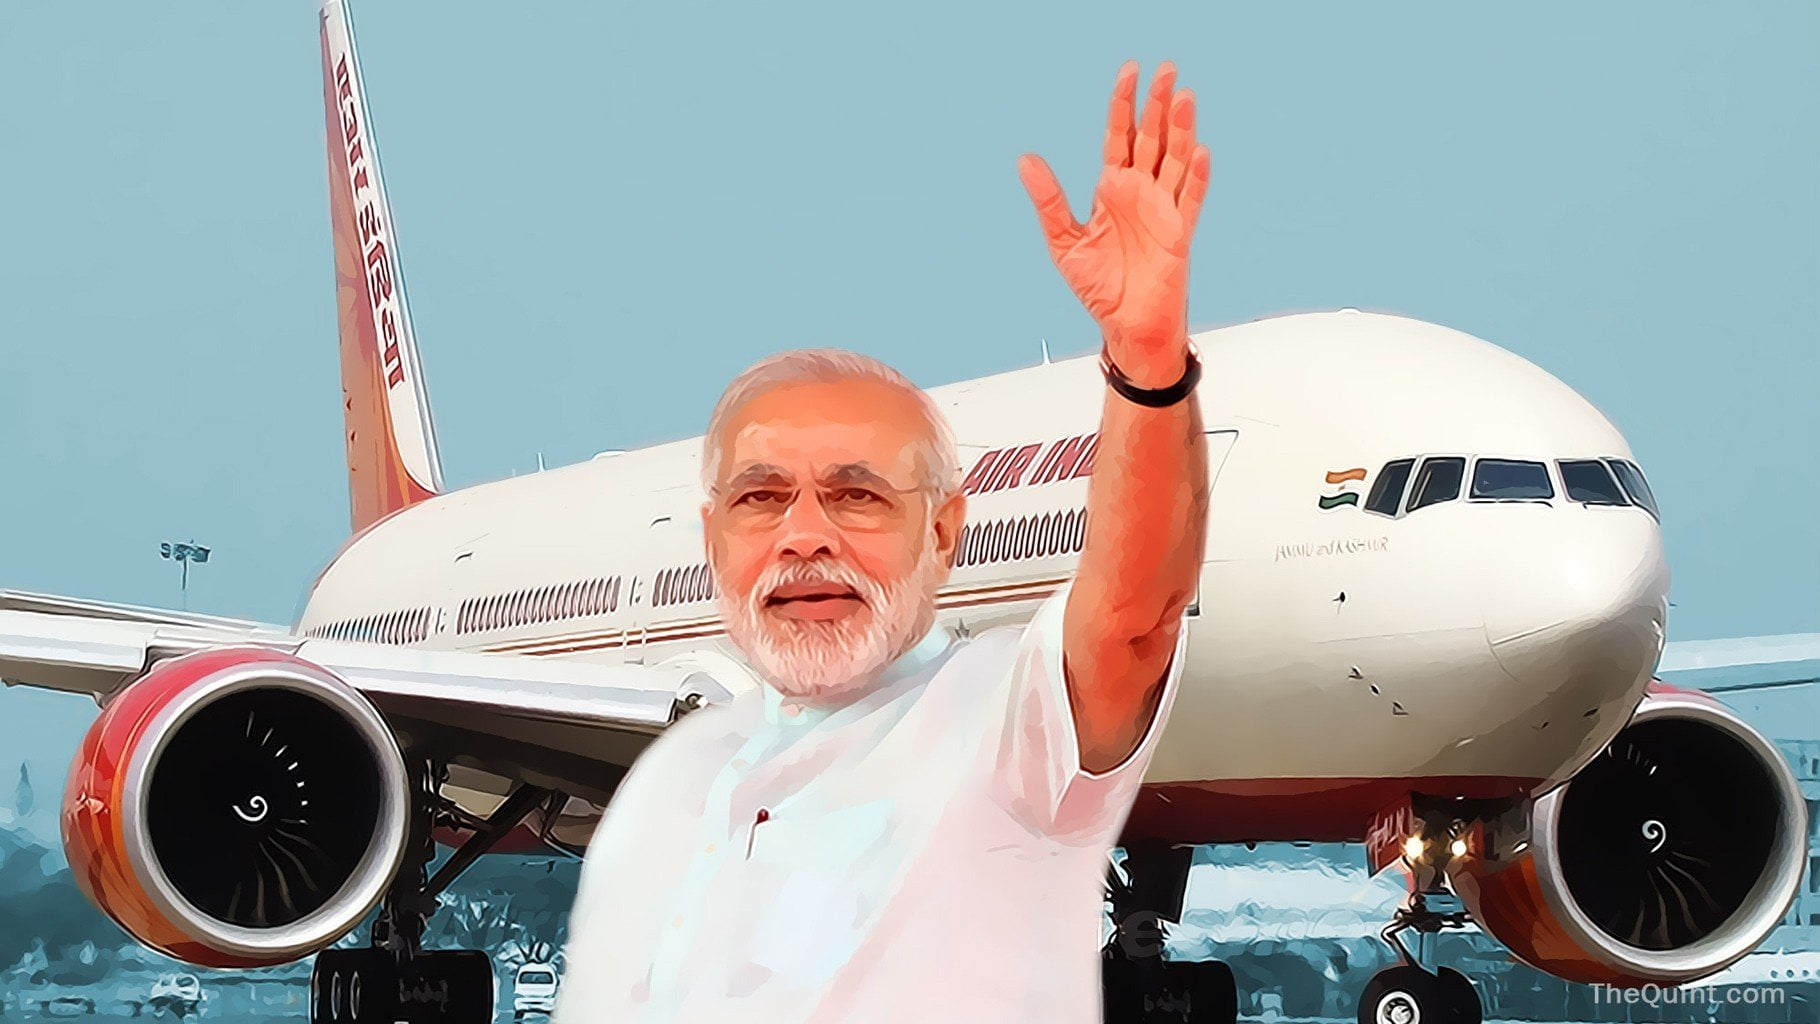 How many Countries Prime Minister Narendra Modi Visited So Far